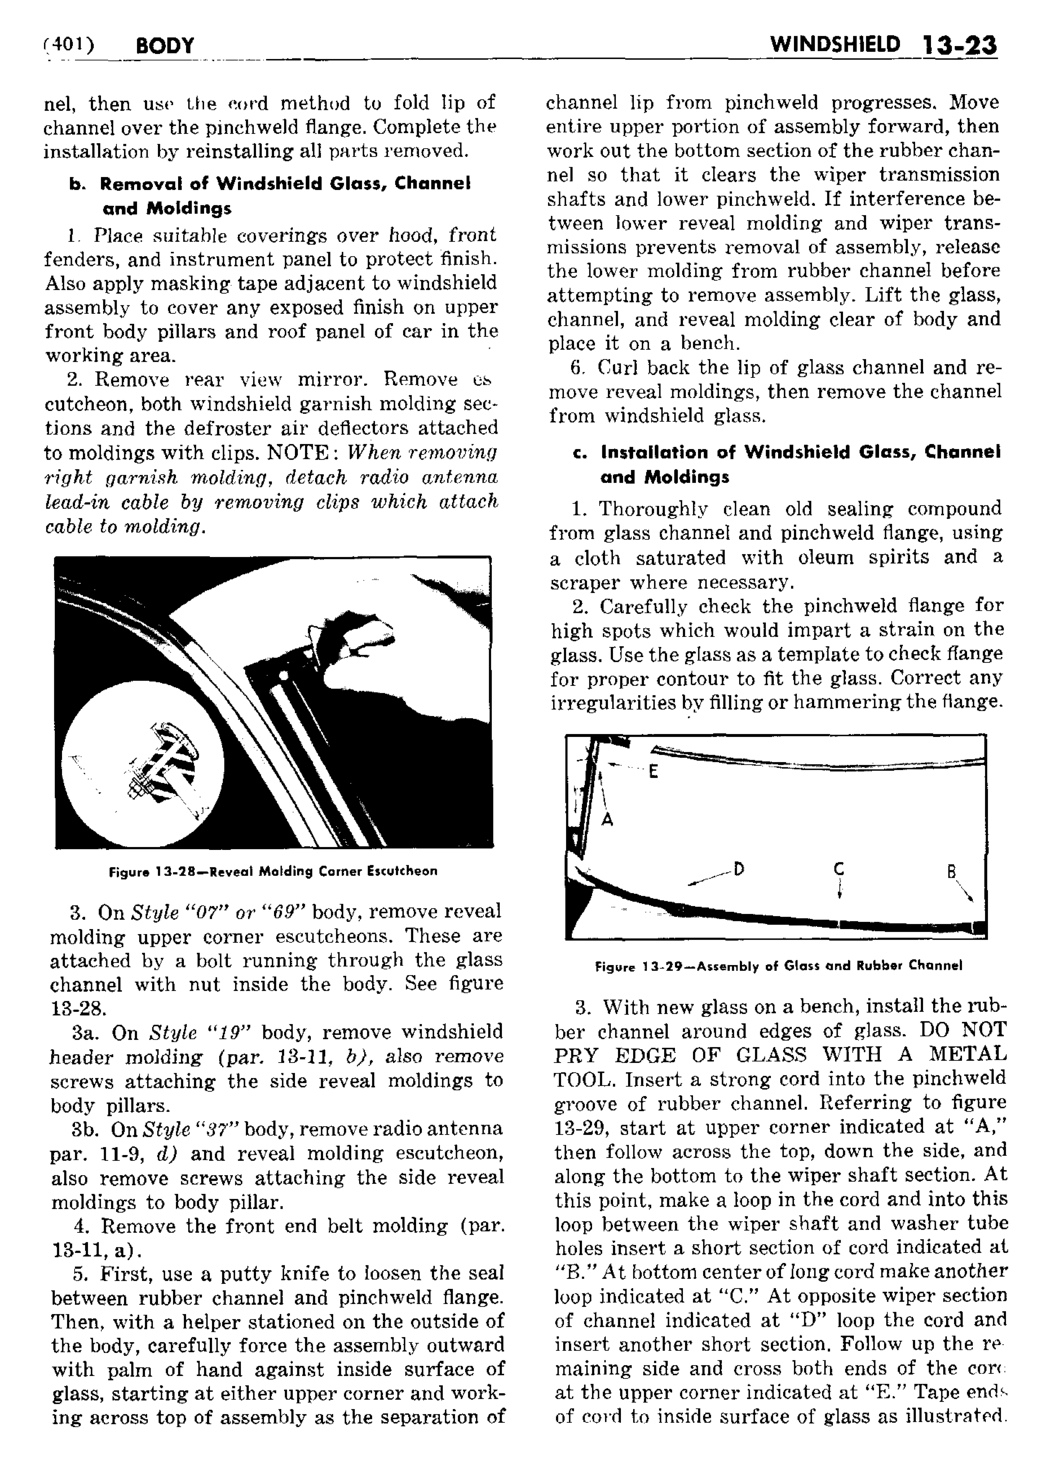 n_14 1950 Buick Shop Manual - Body-023-023.jpg